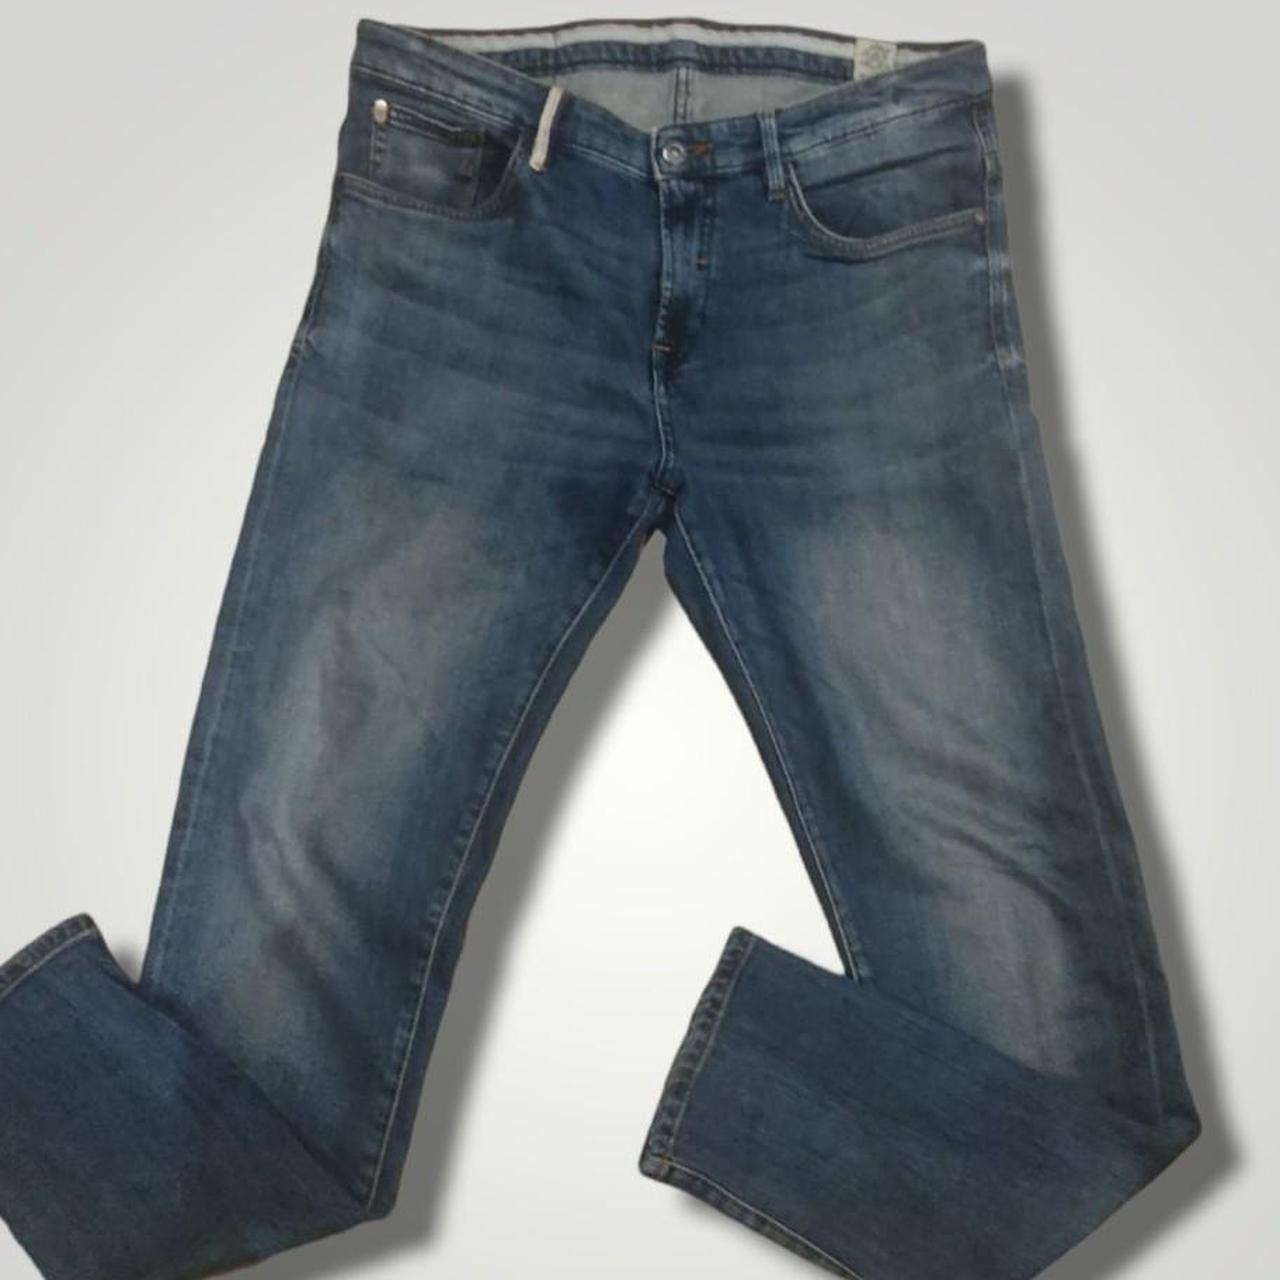 Allen Solly jeans co Est 1744 made different mens... - Depop